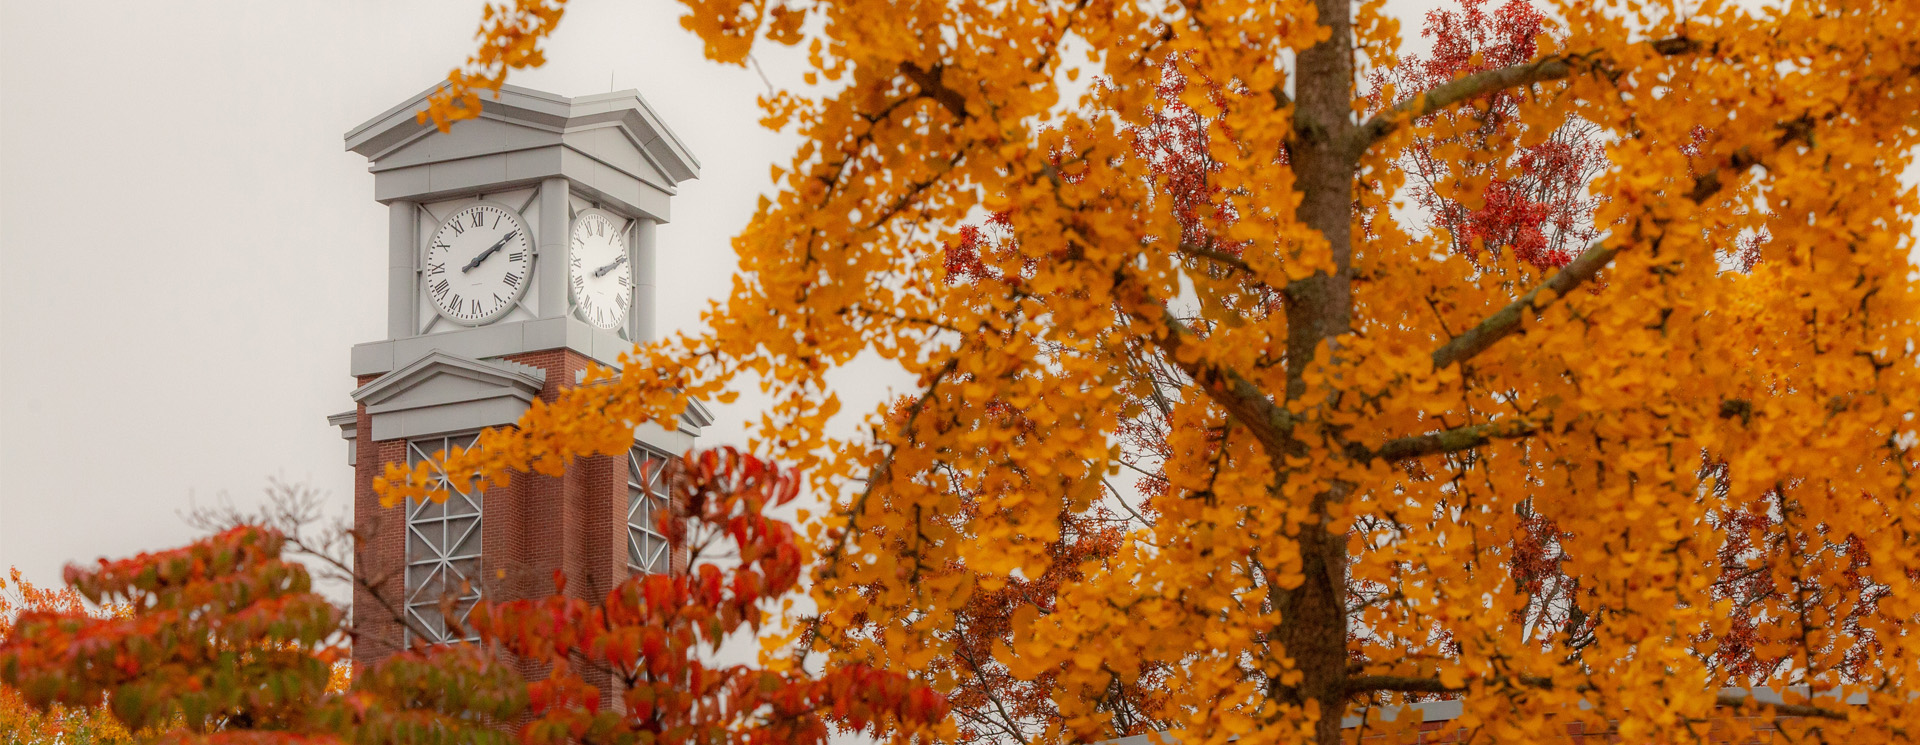 the Eastern clocktower seen through orange leaves